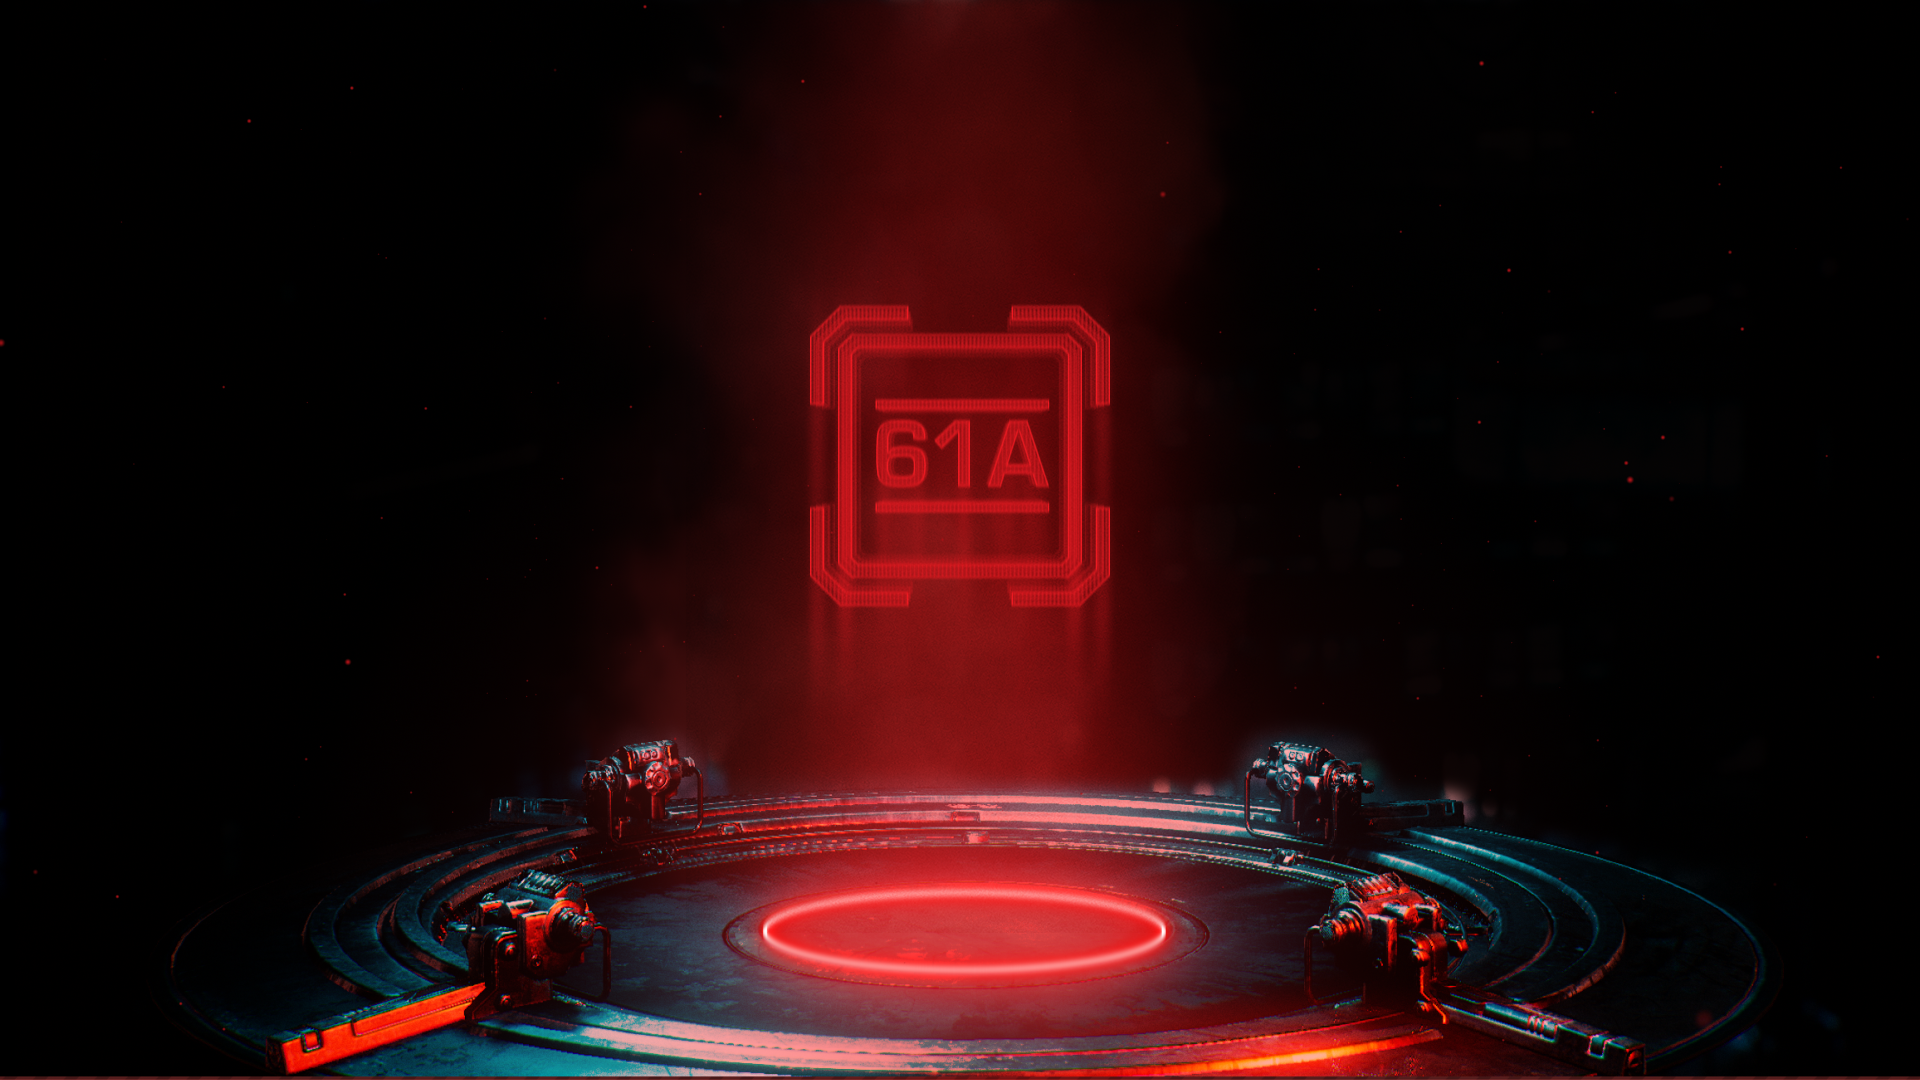 Icon for Protocol 61A